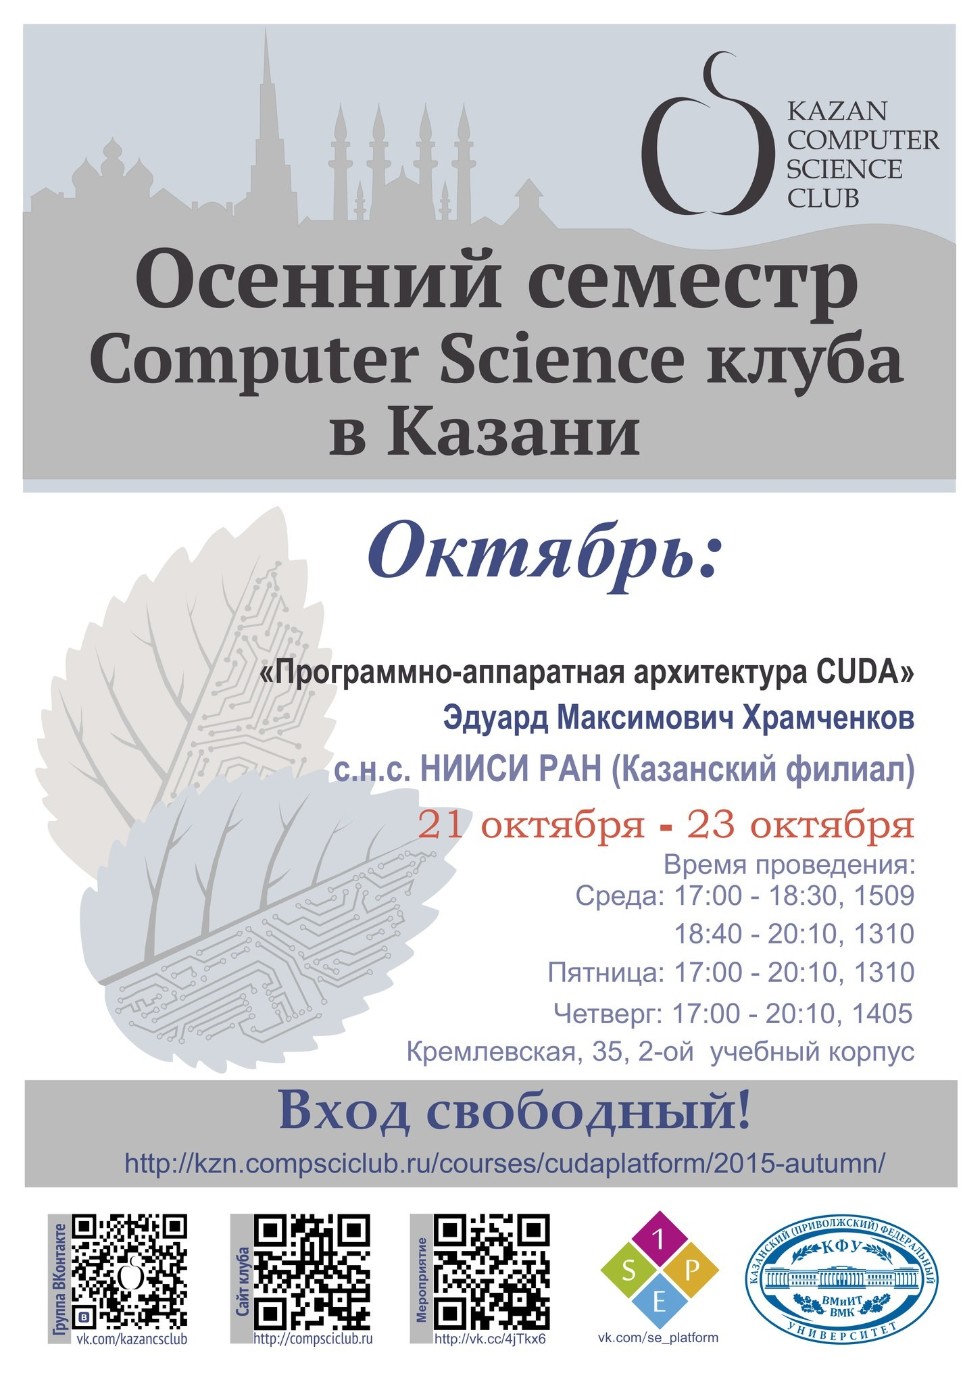 Computer Science Club